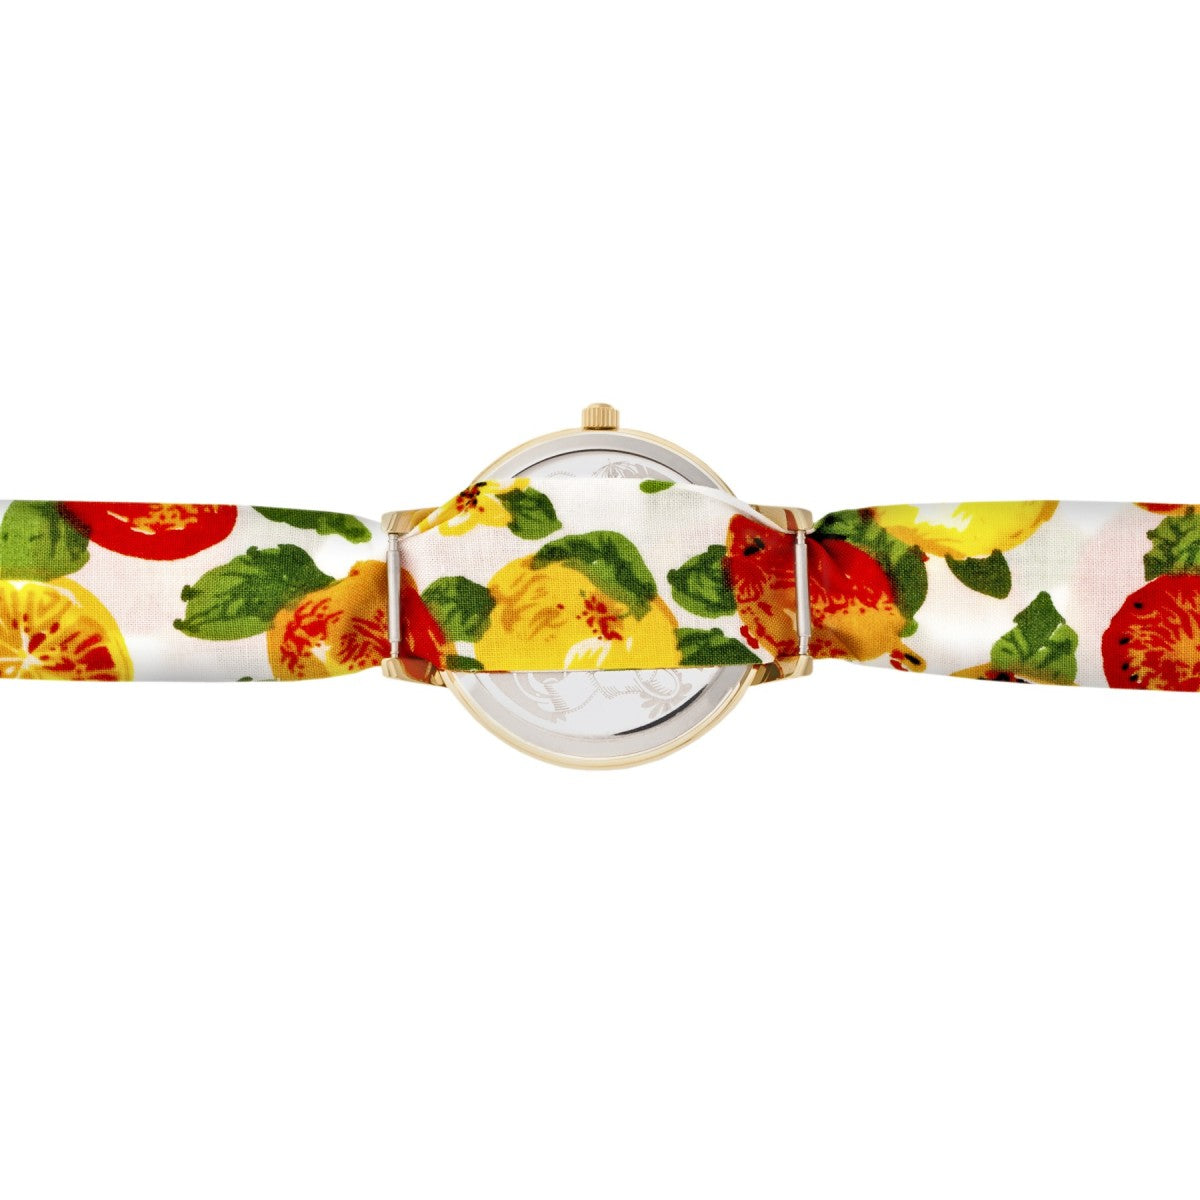 Boum Arc Floral-Print Wrap Watch - Gold/White - BOUBM5003